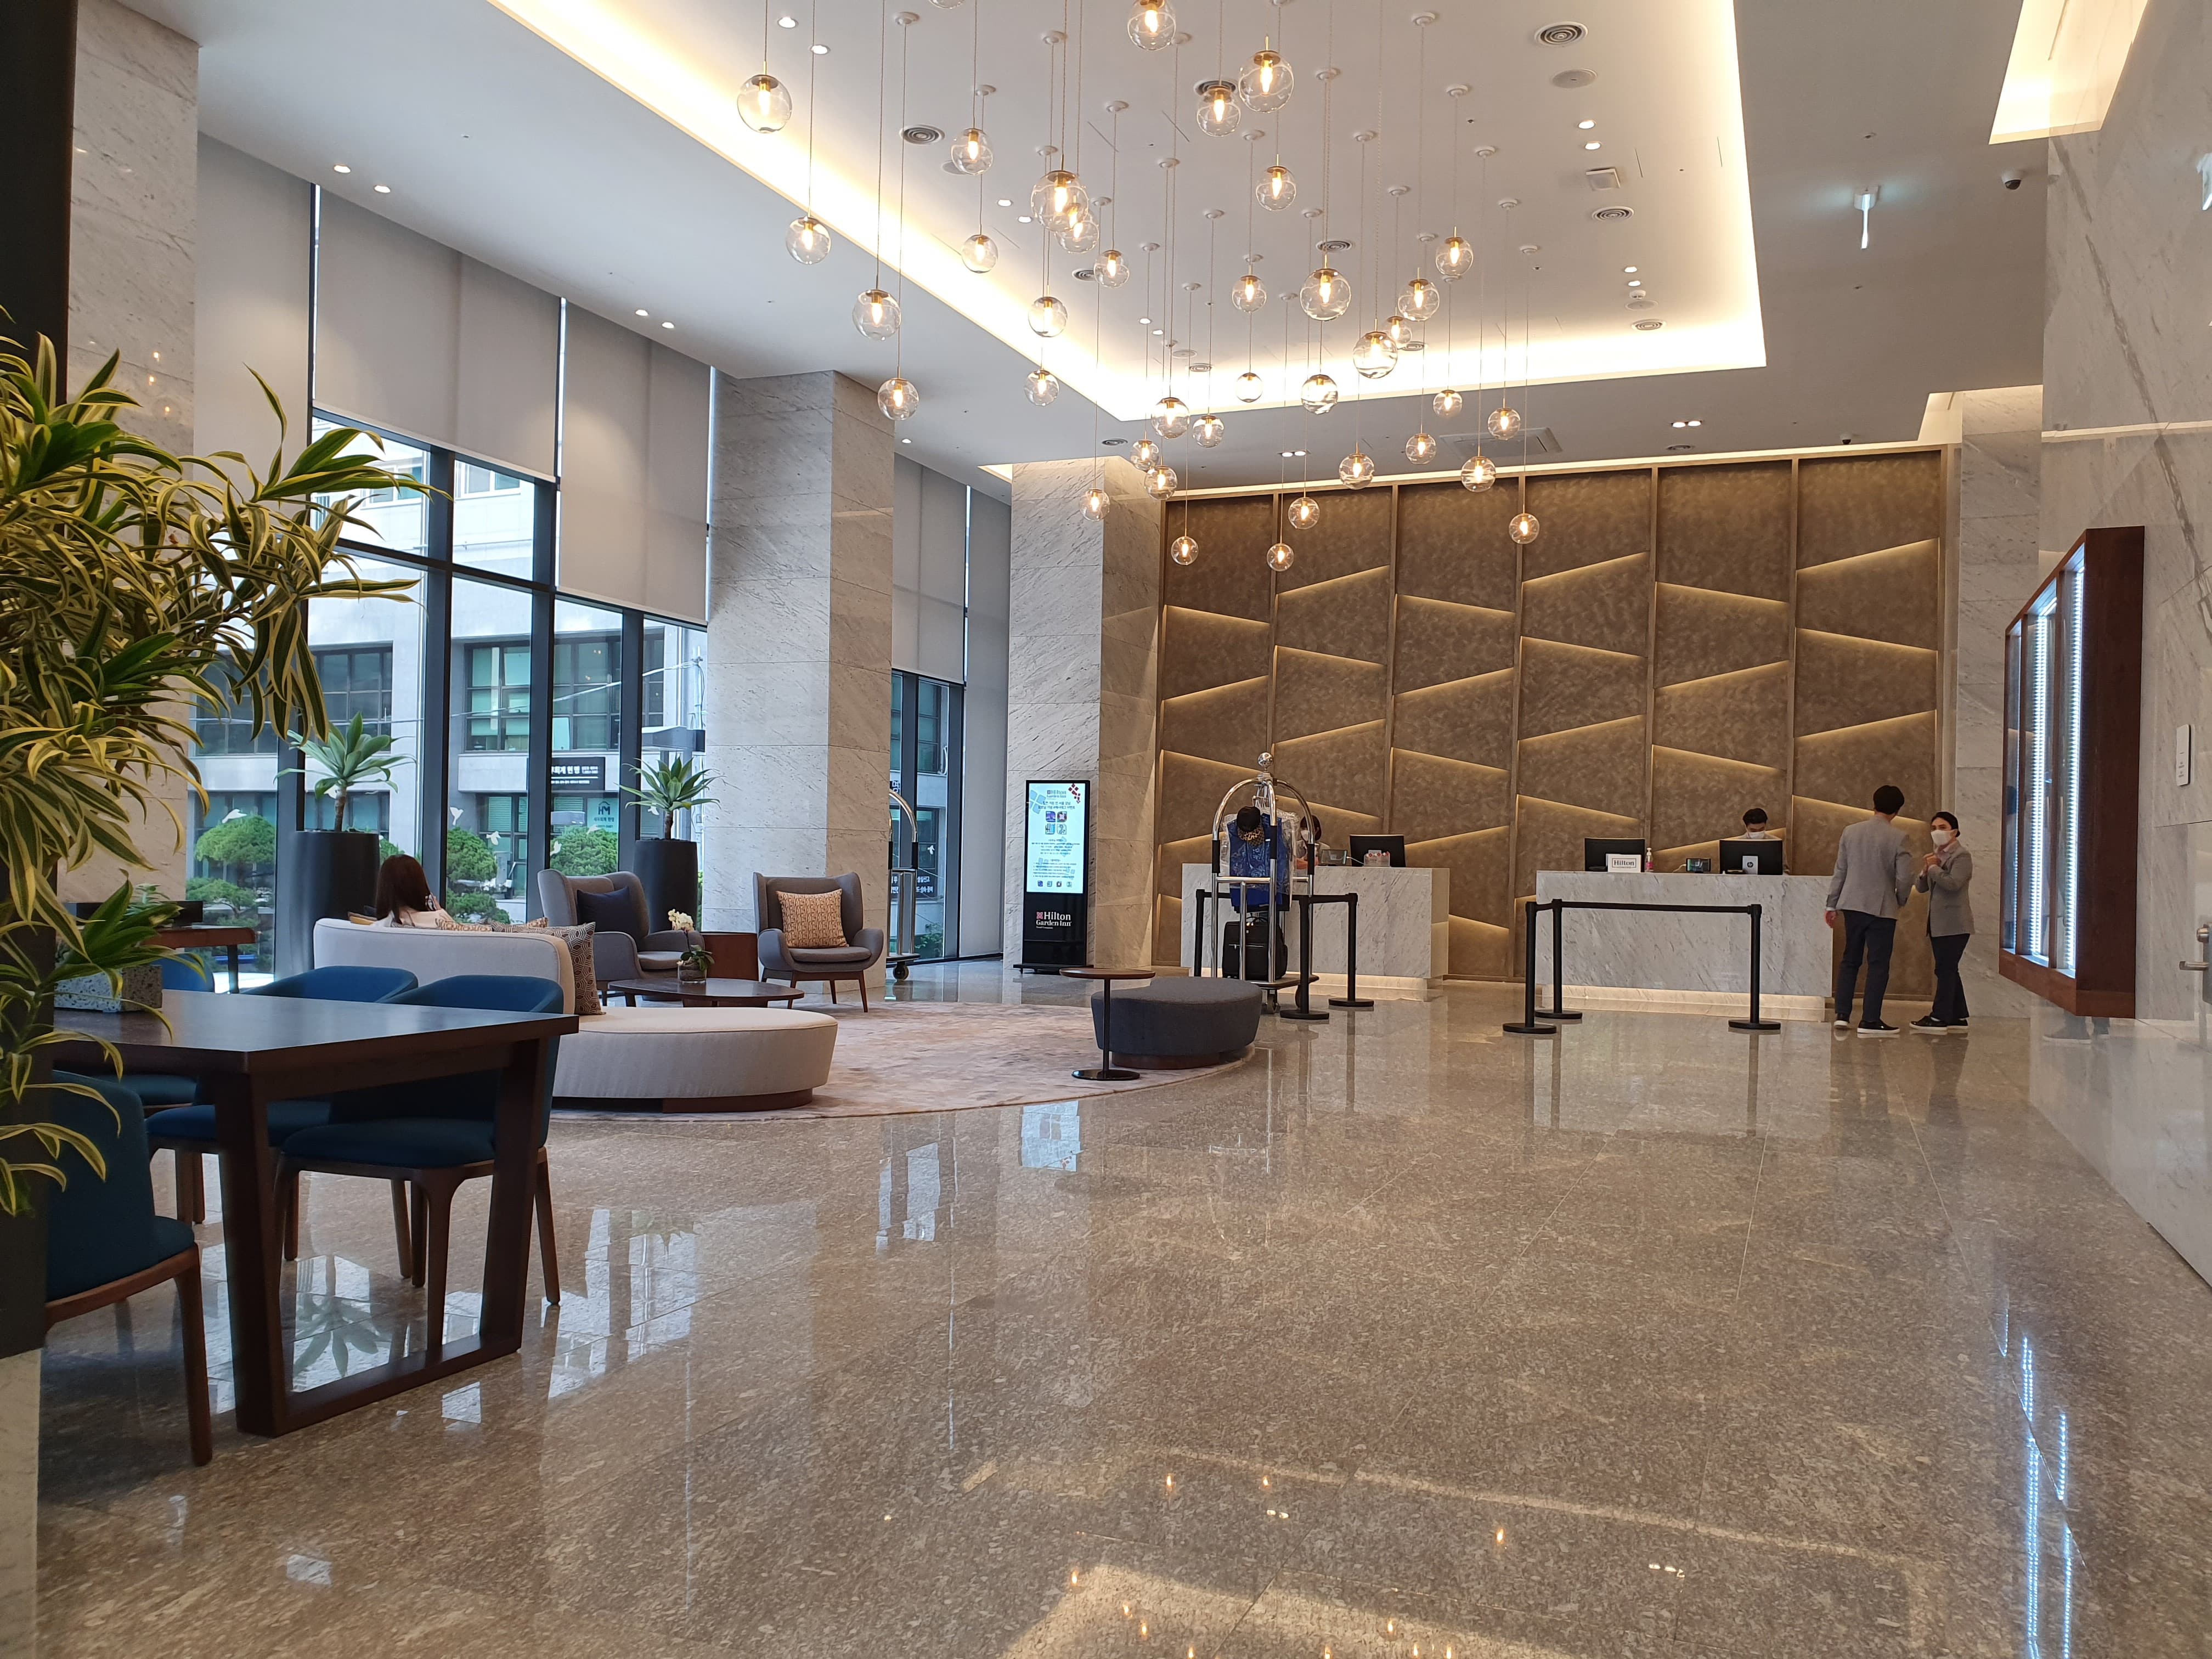 Hilton Garden Inn Seoul Gangnam	3 : Elegant hotel lobby with high ceilings and lots of lighting